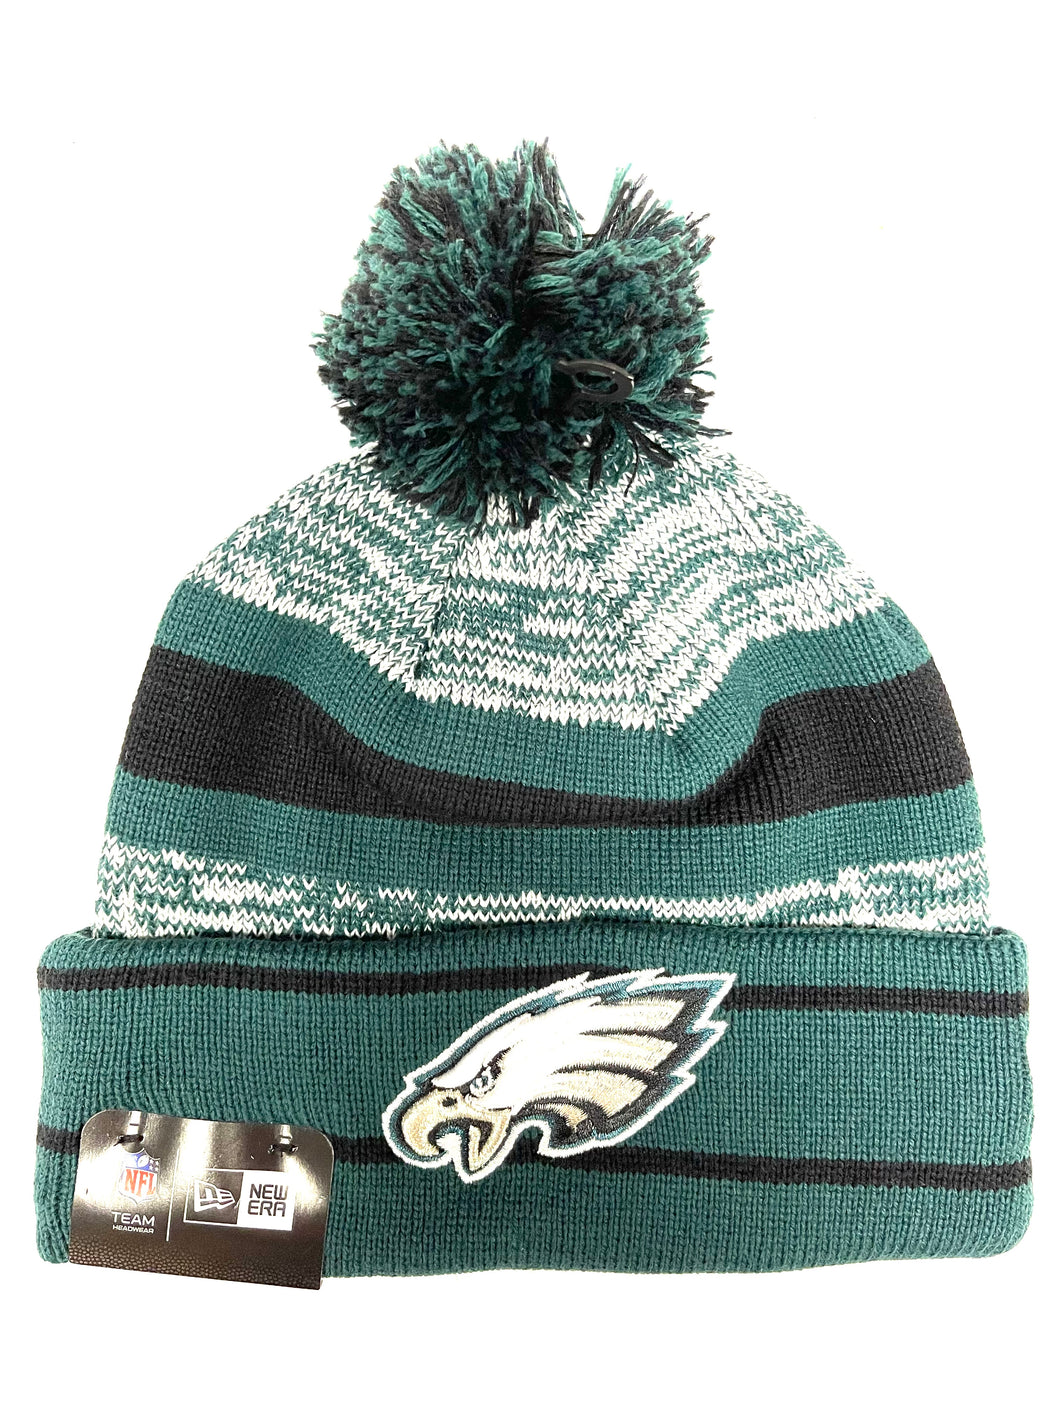 New Era NFL Philadelphia Eagles Cuff Pom Knit